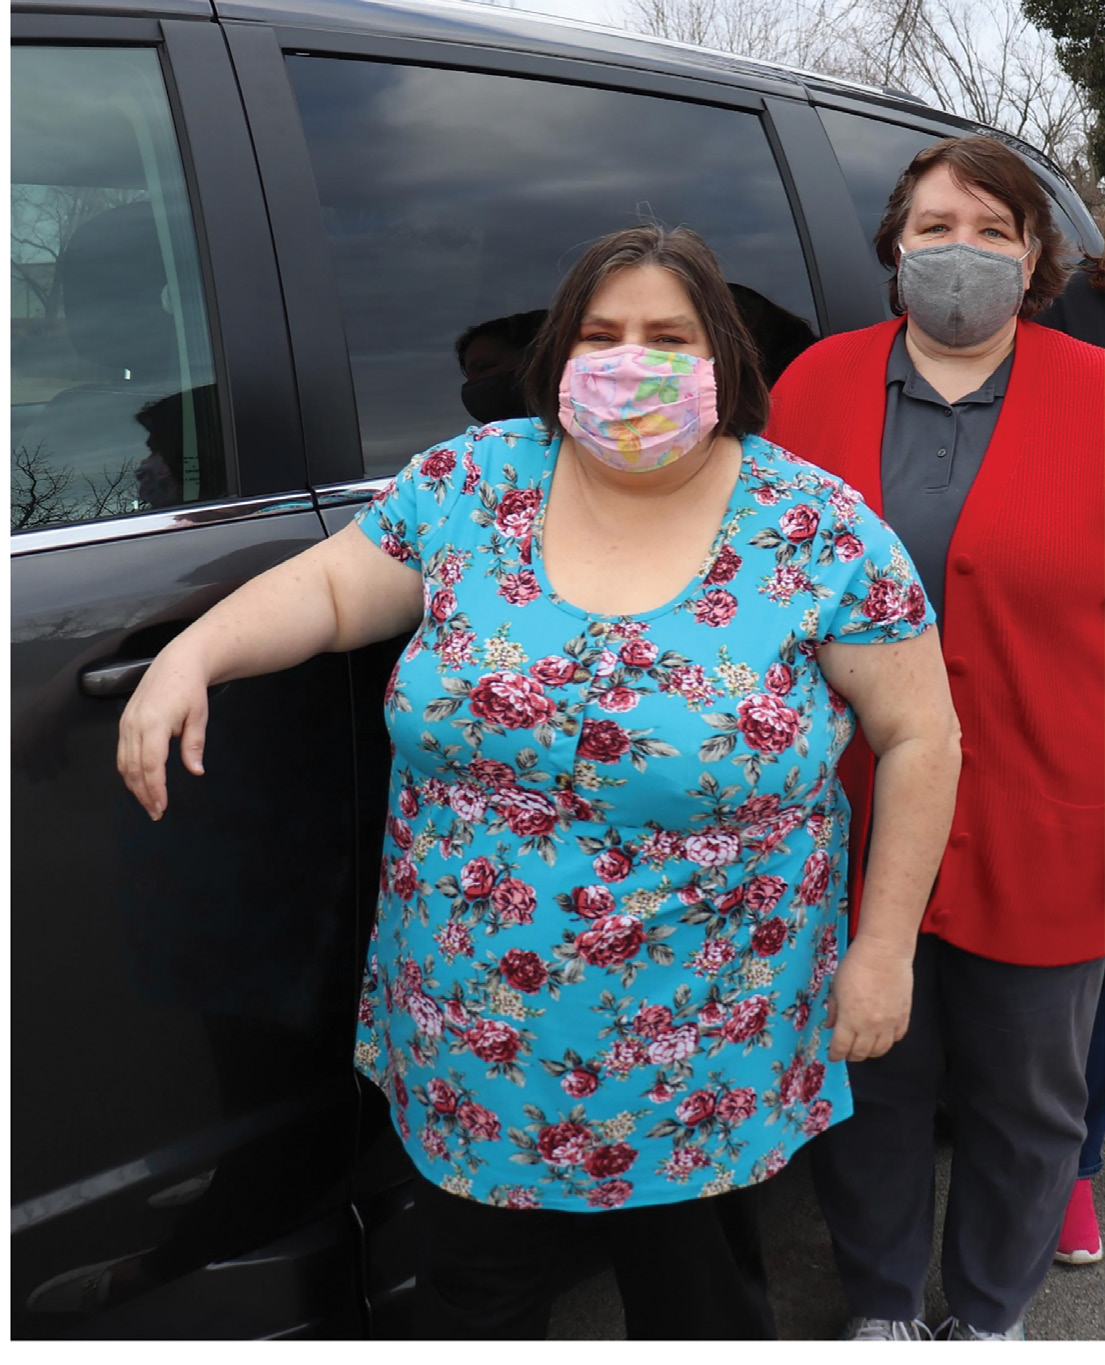 Two women wearing masks stand next to van